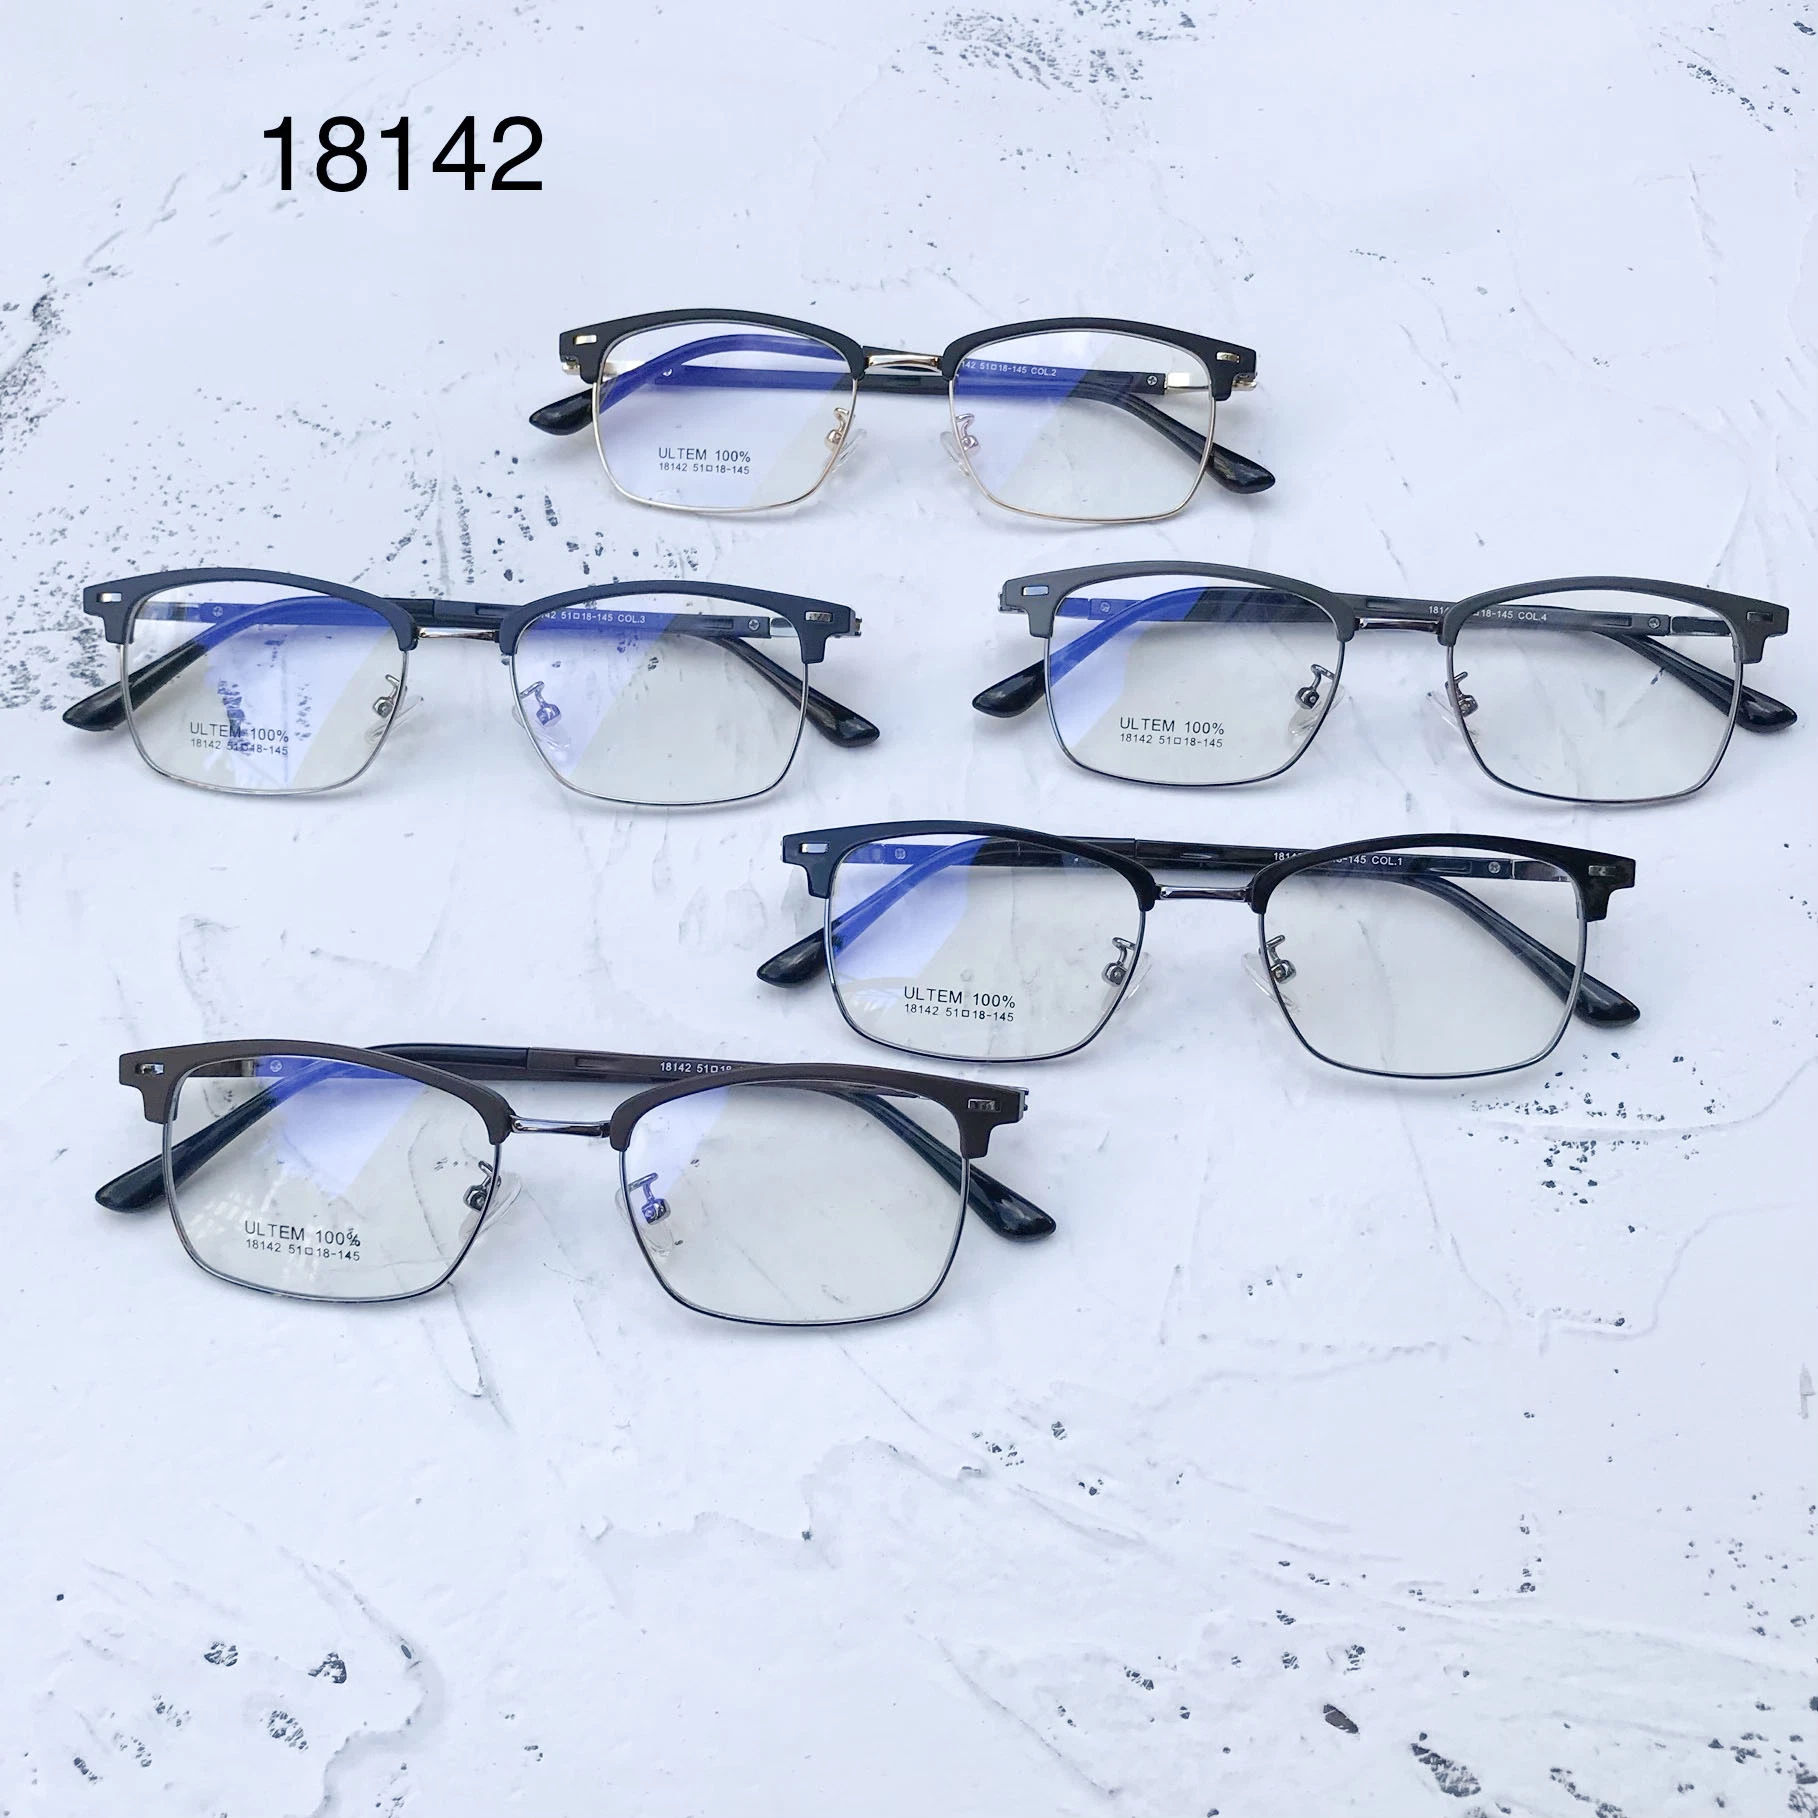 New Arrival Glasses Optical Frame Half Frame Metal Frame Half Rim Glasses Frame OEM Eyeglasses Frames